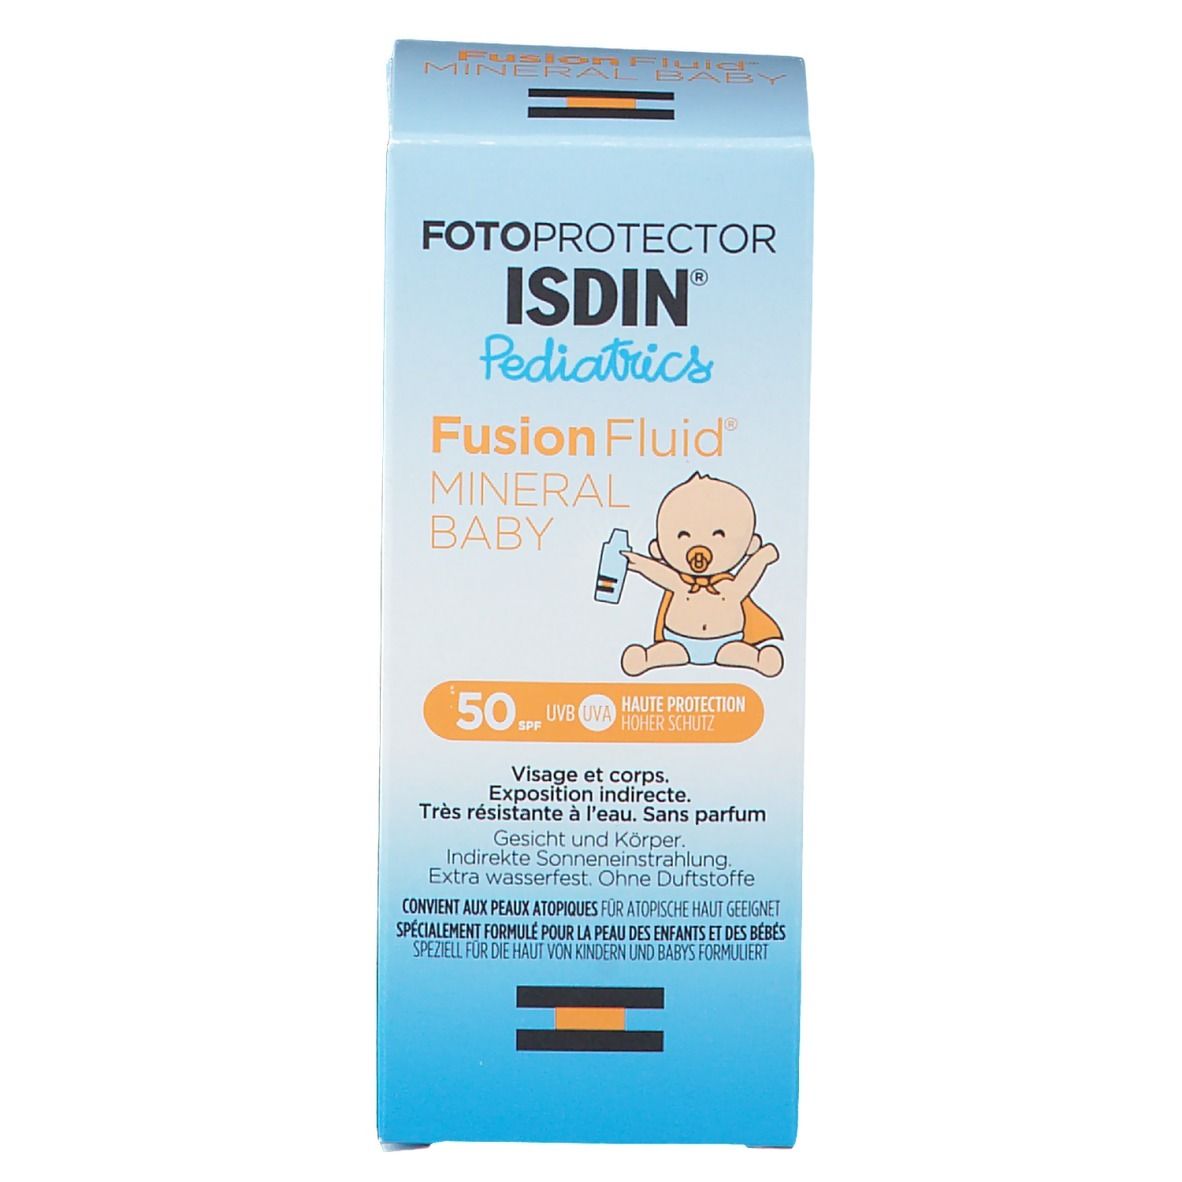 Fotoprotector ISDIN Pediatrics Fusion Fluid Mineral Baby SPF 50